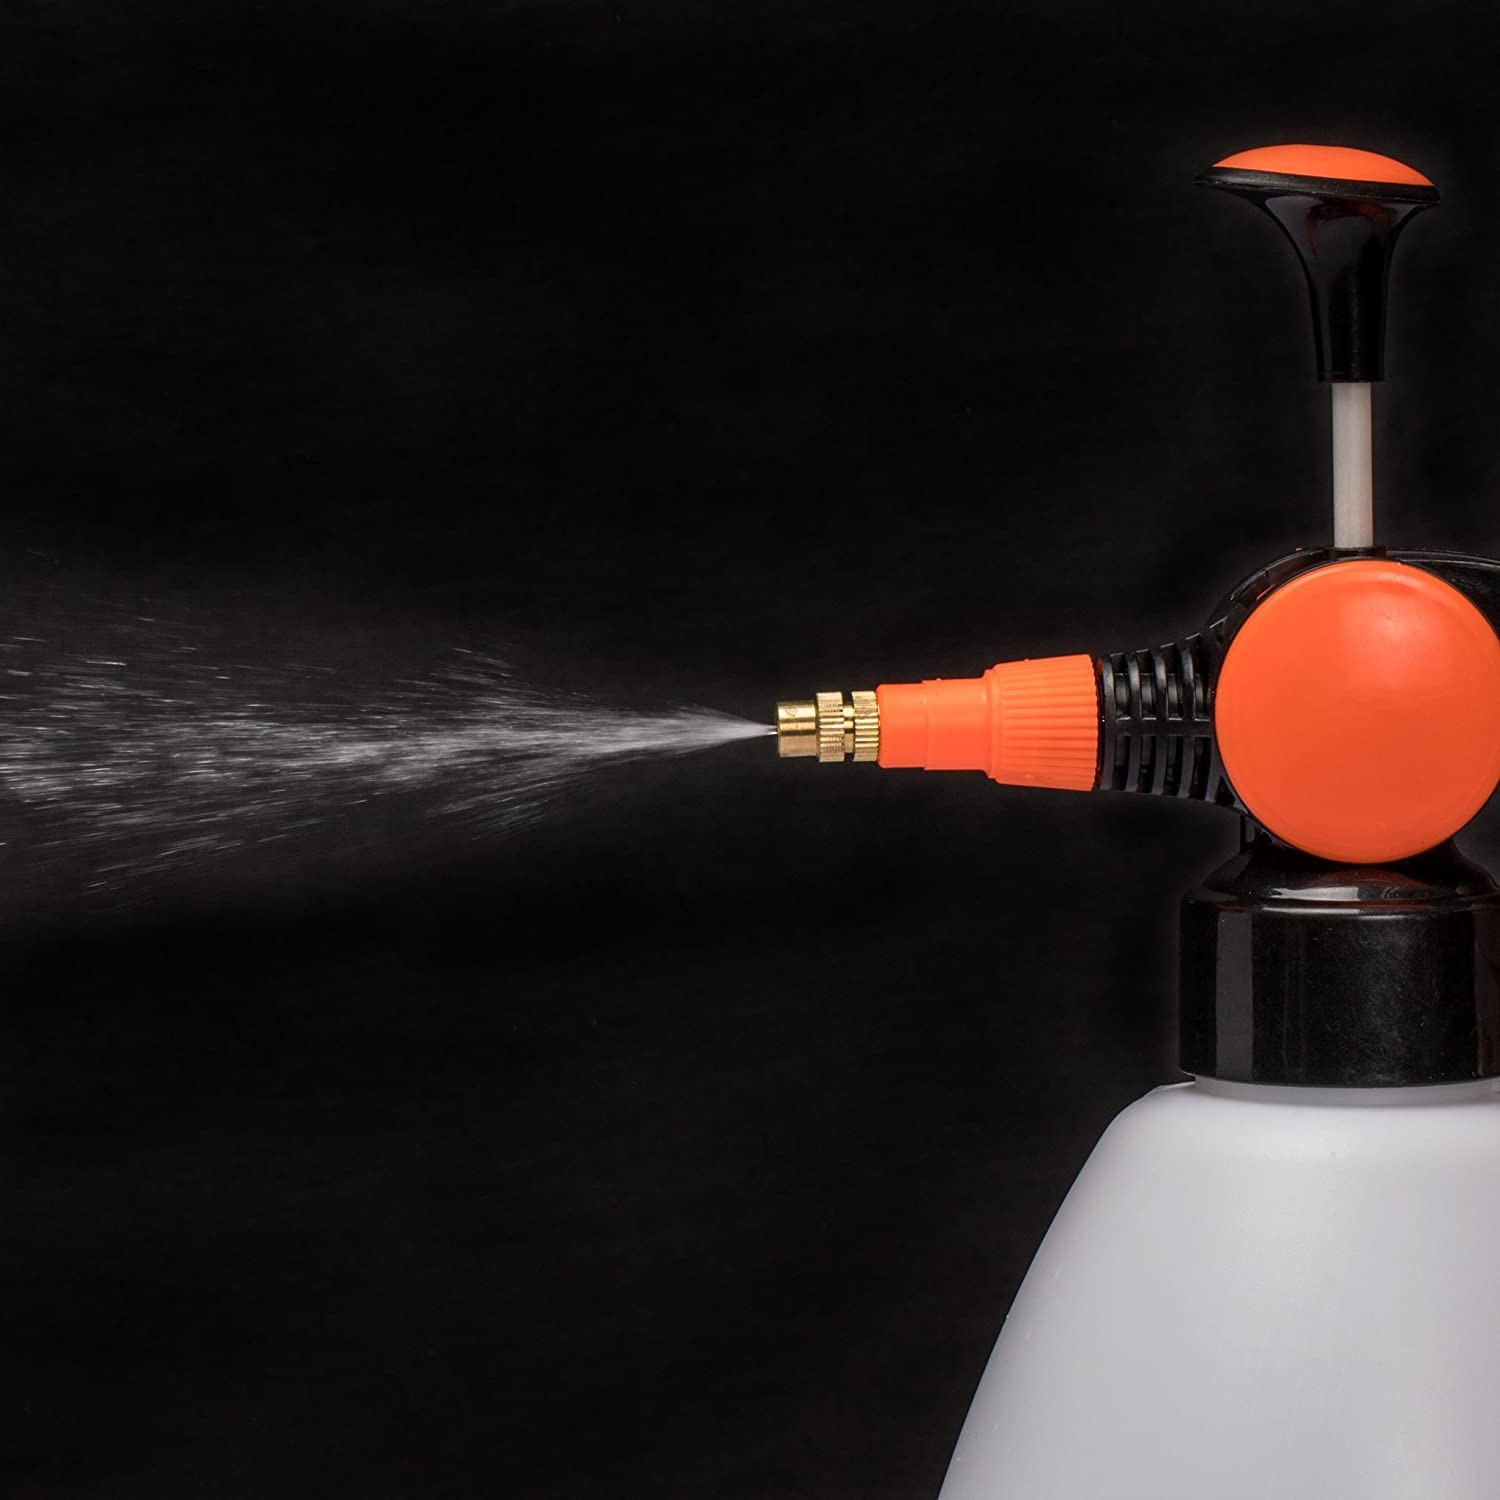 ESP 1.5 Liters Handheld Sprayer with Adjustable Pressure Nozzle